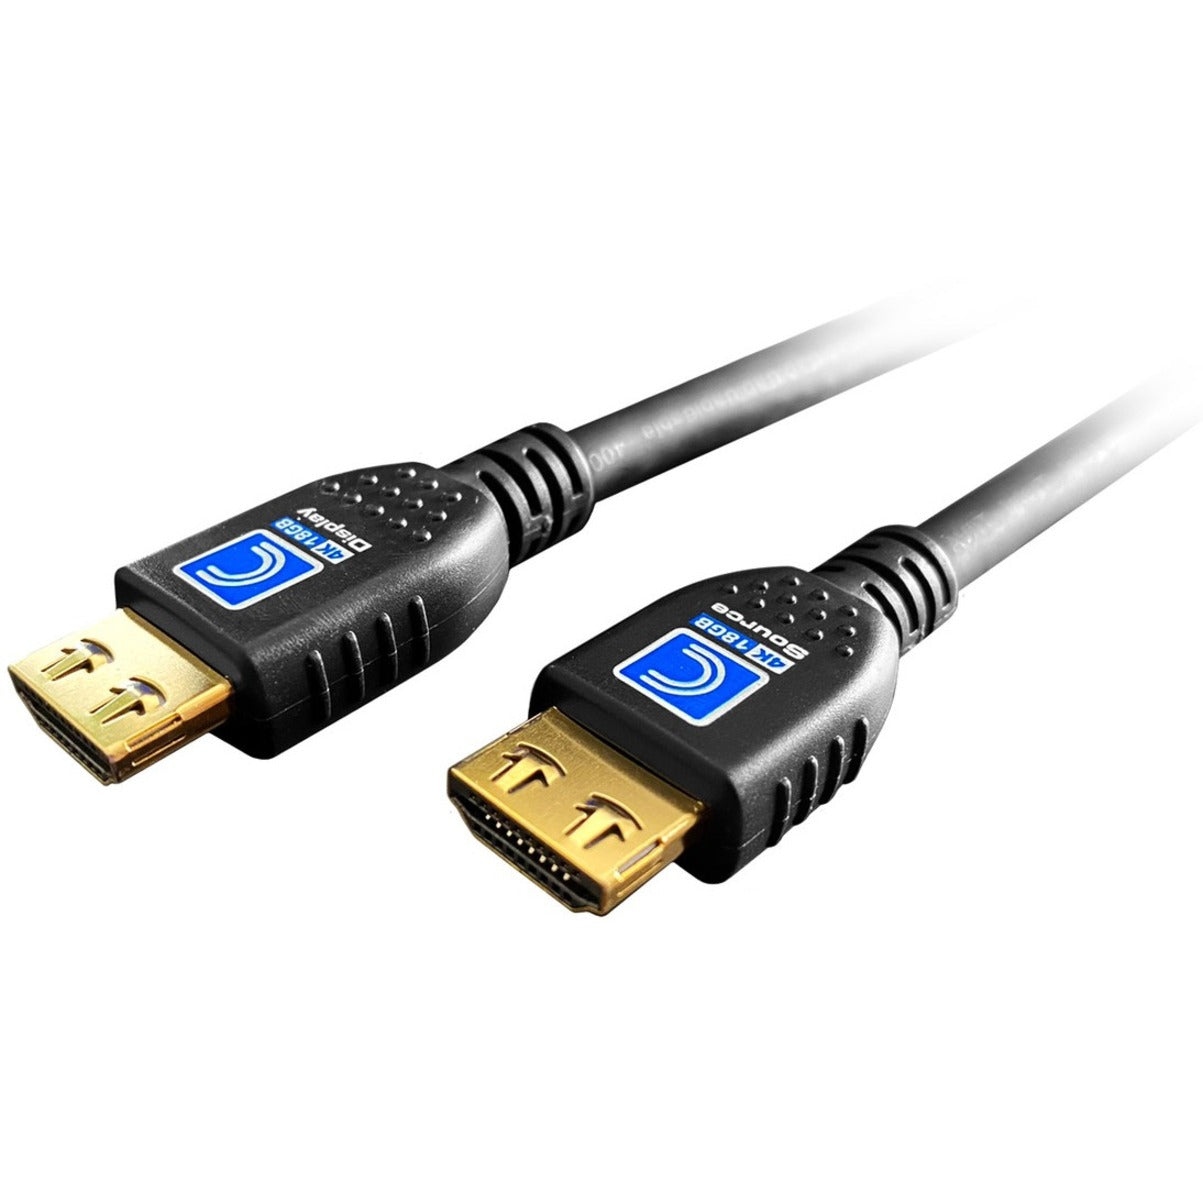 Comprehensive NFHD18G-20PROBLKA NanoFlex Pro AV/IT Integrator Series HDMI Cable, 20ft, 4K 18G High Speed, Lifetime Warranty